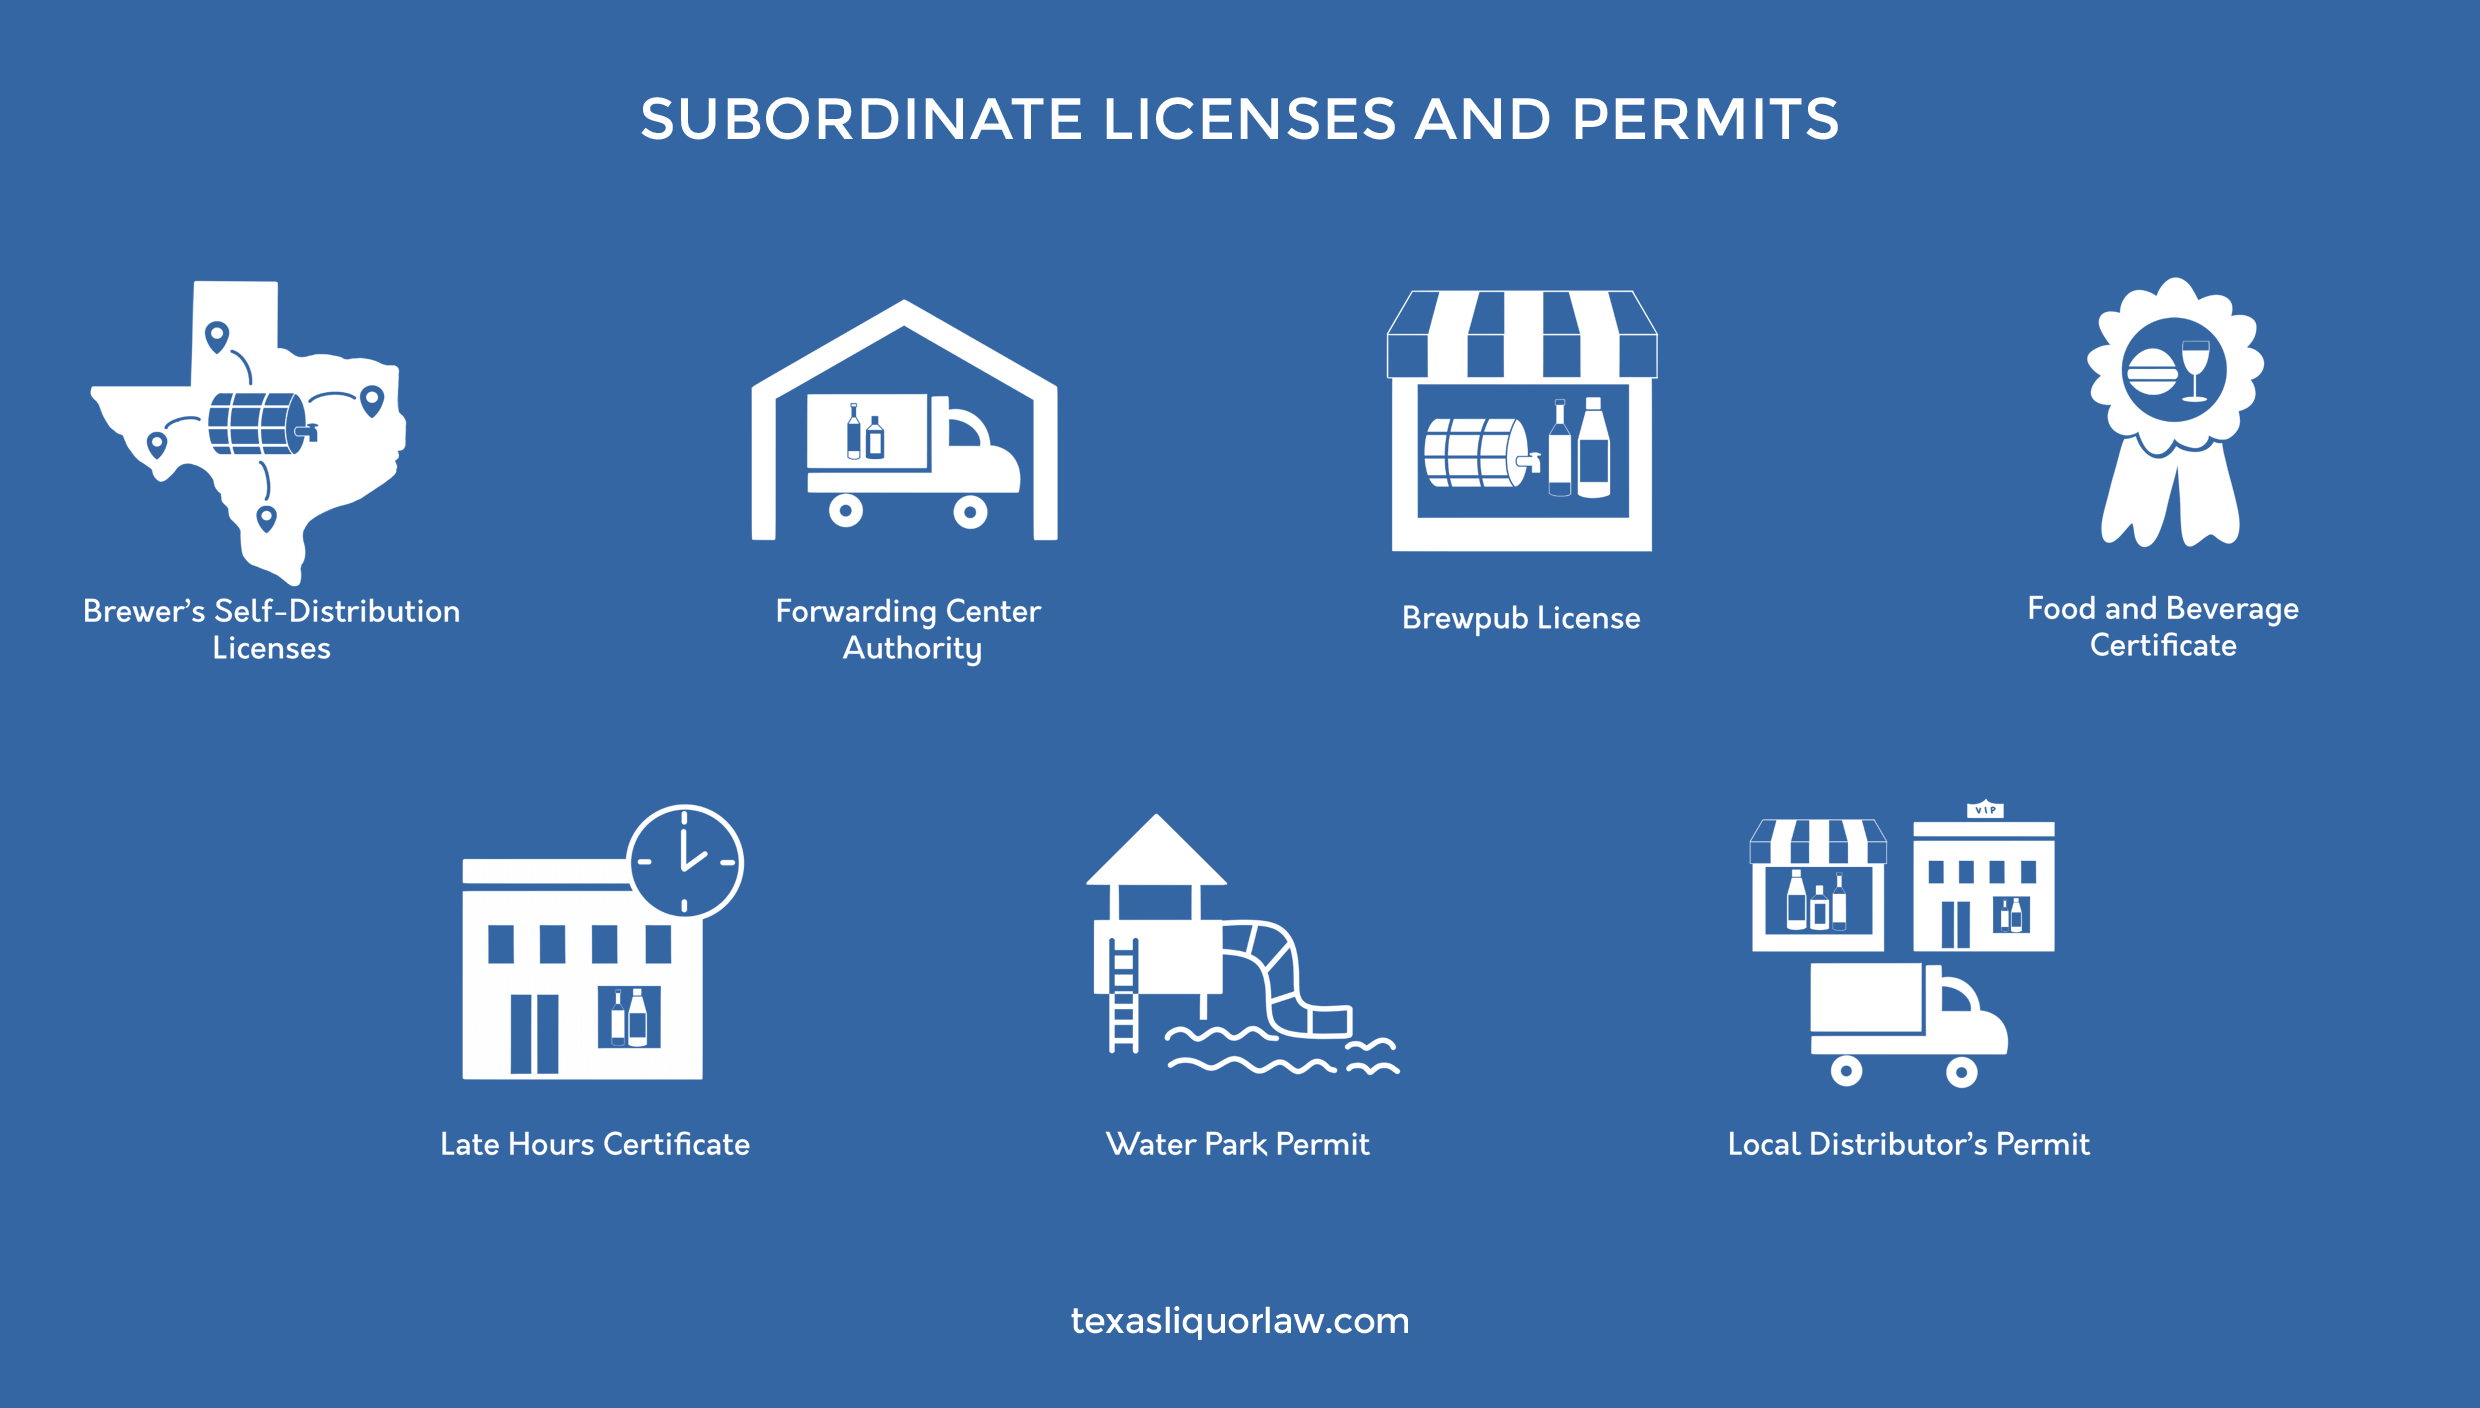 TABC - Subordinate Licenses and Permits